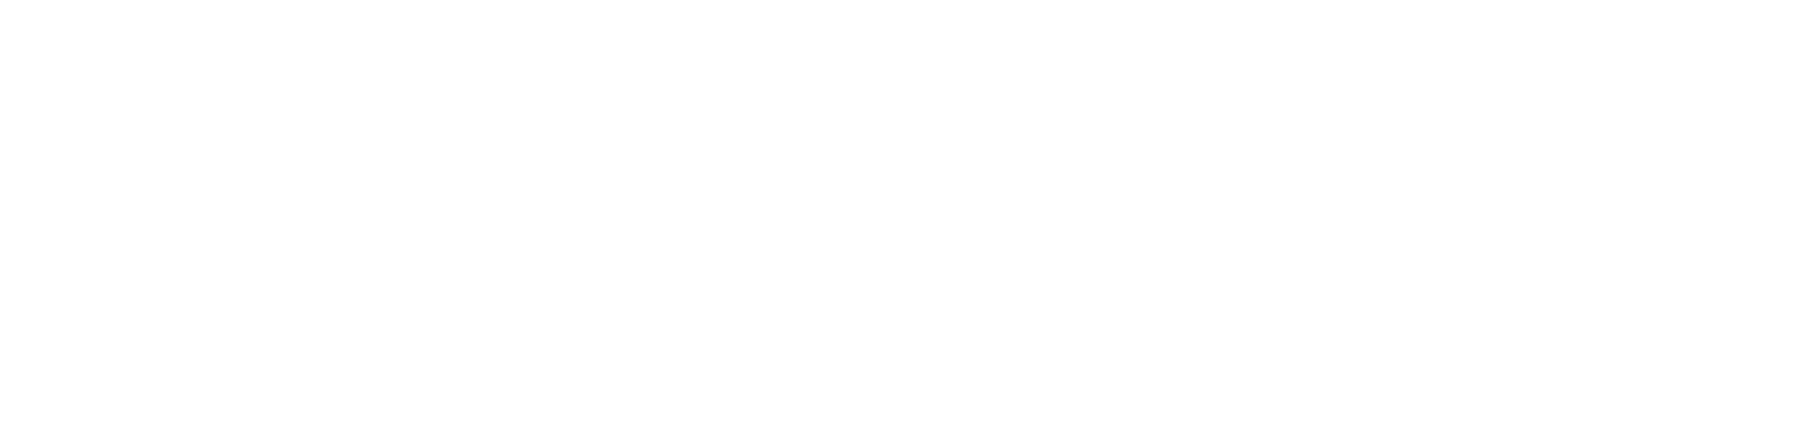 Utility Concierge Logo